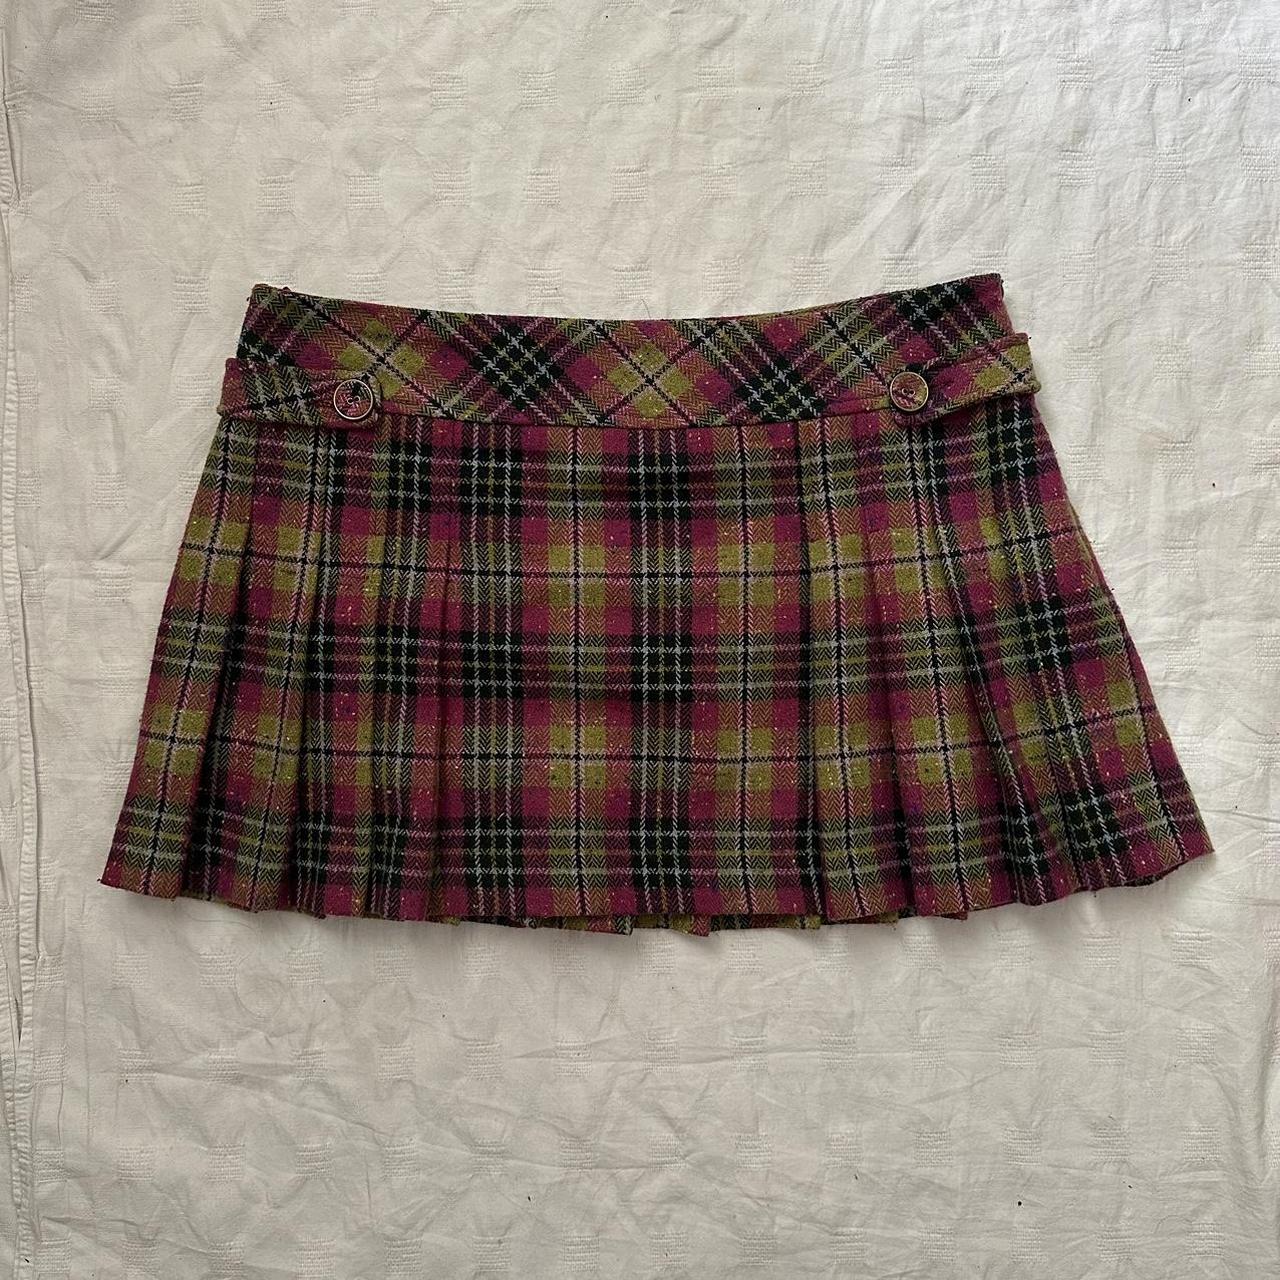 Most beautiful tartan pleated skirt from next Green... - Depop